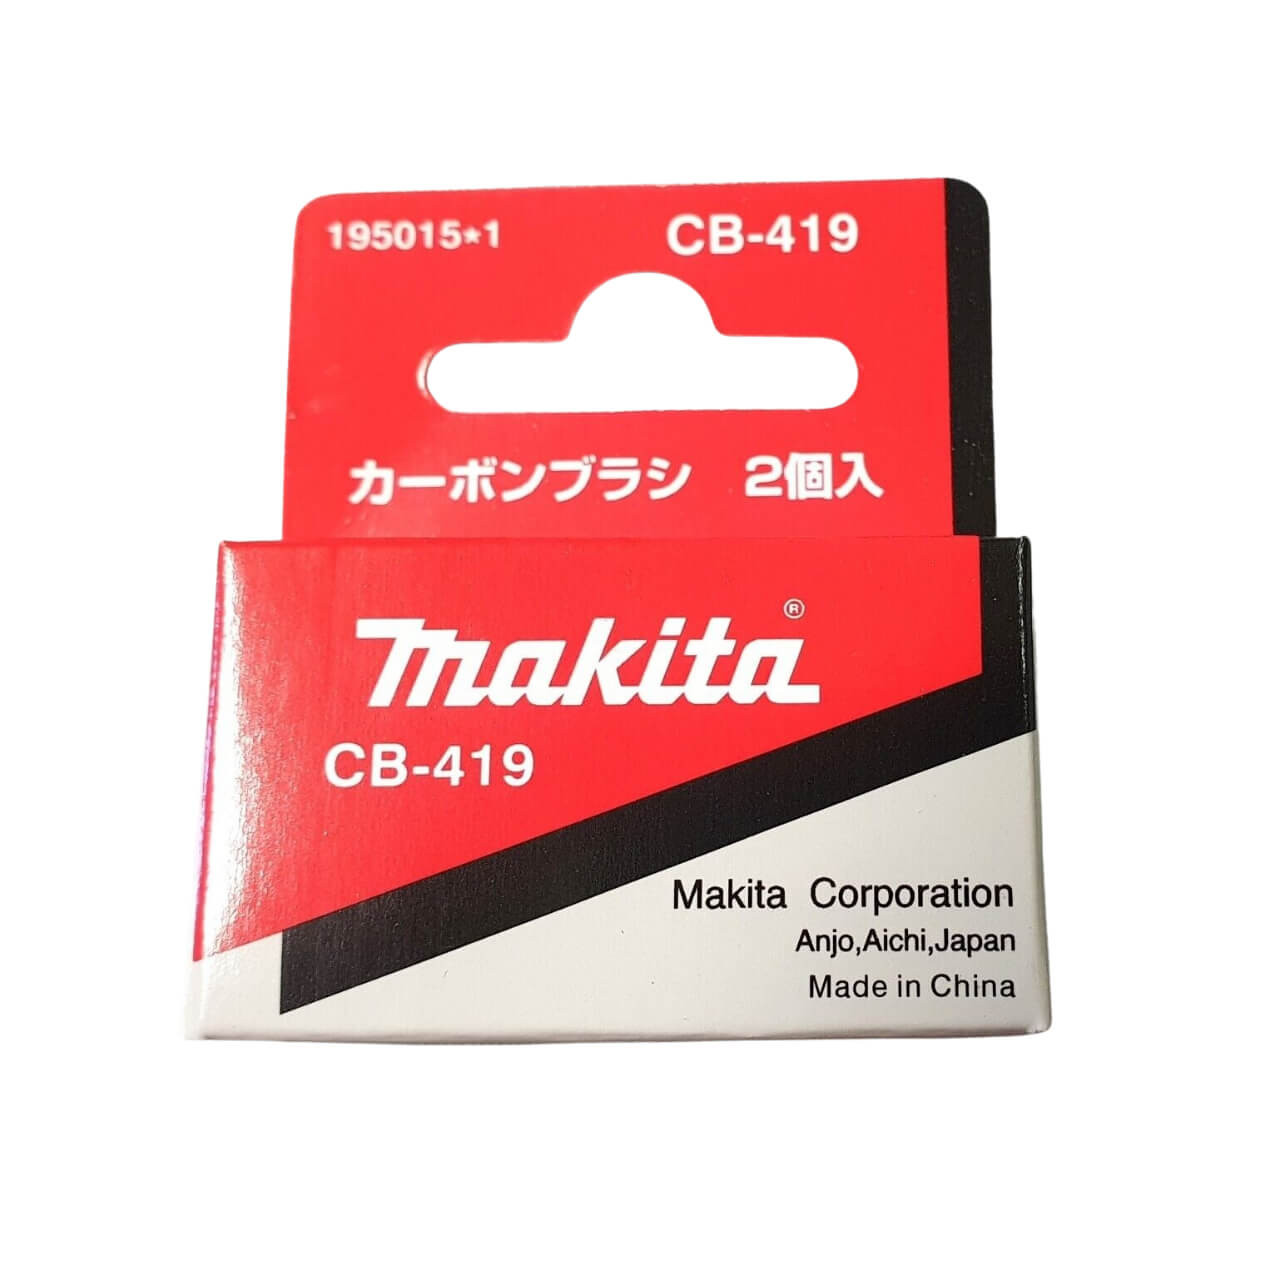 Makita Cb419 Carb Brush Set